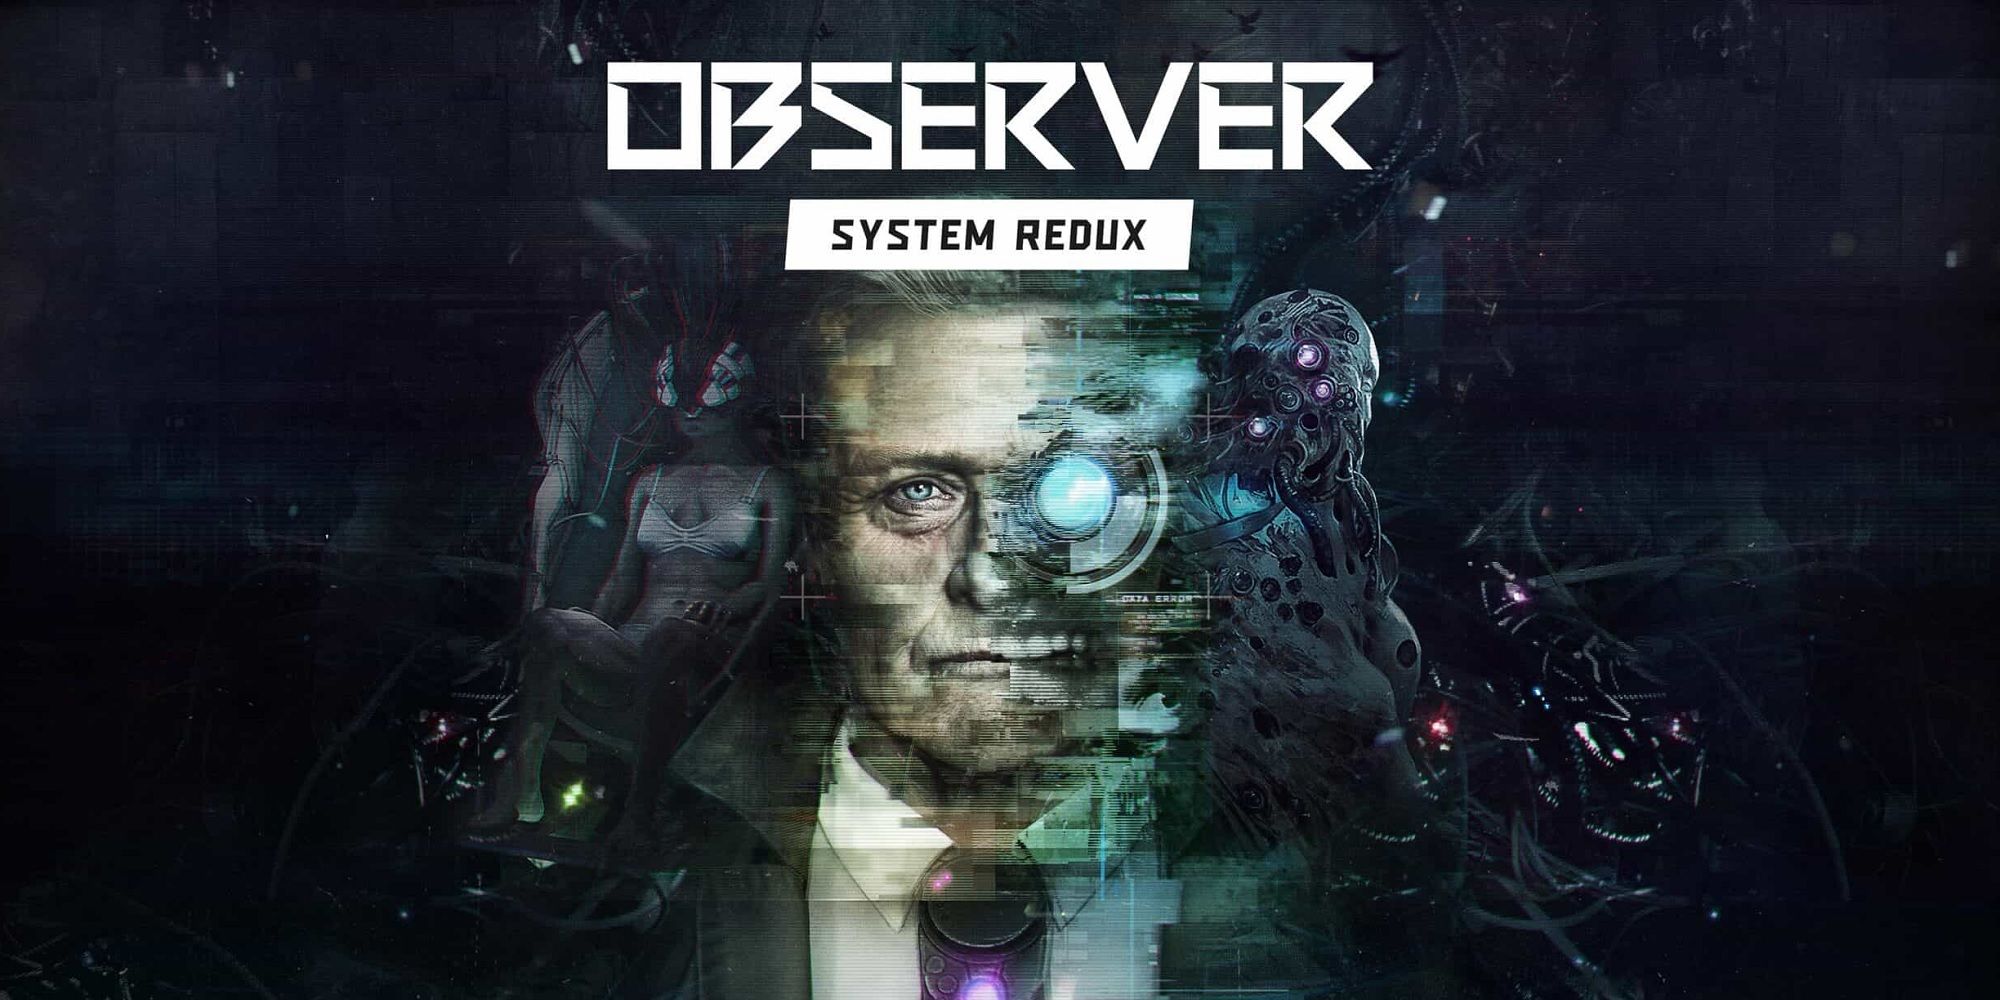 observer system redux side quests